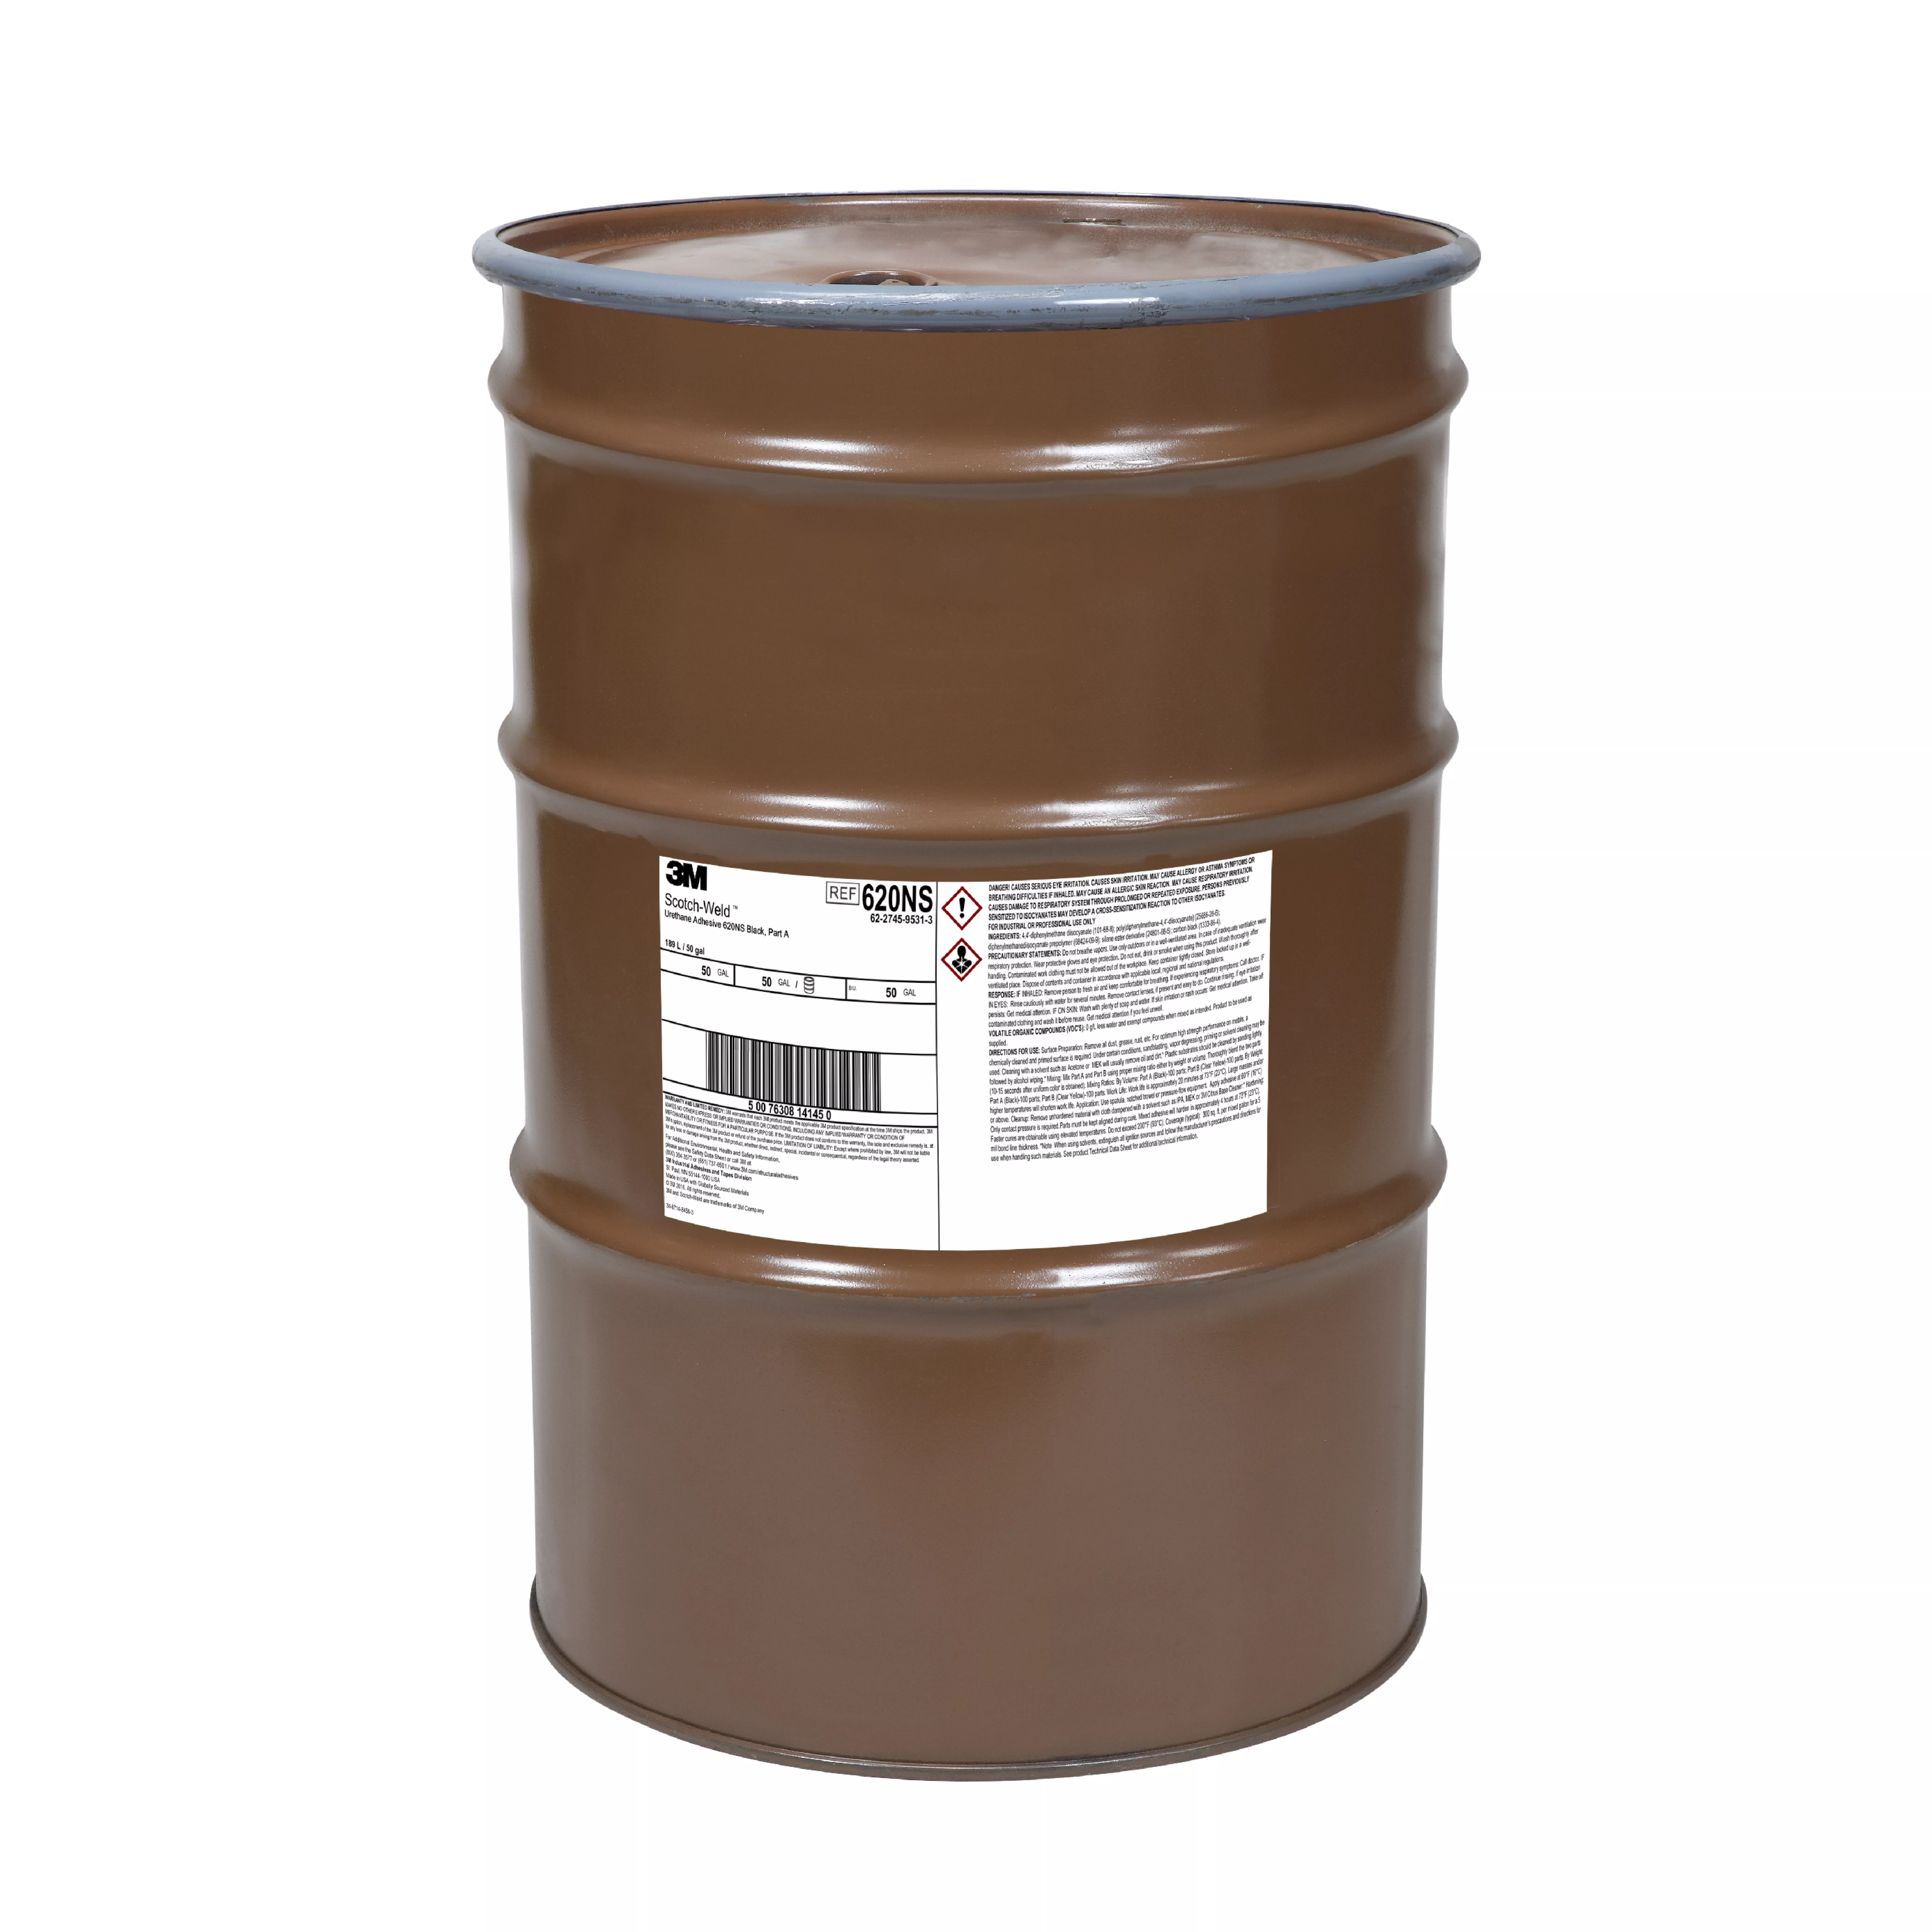 3M™ Scotch-Weld™ Urethane Adhesive 620NS, Black, Part A, 55 Gallon (50
Gallon Net), Drum